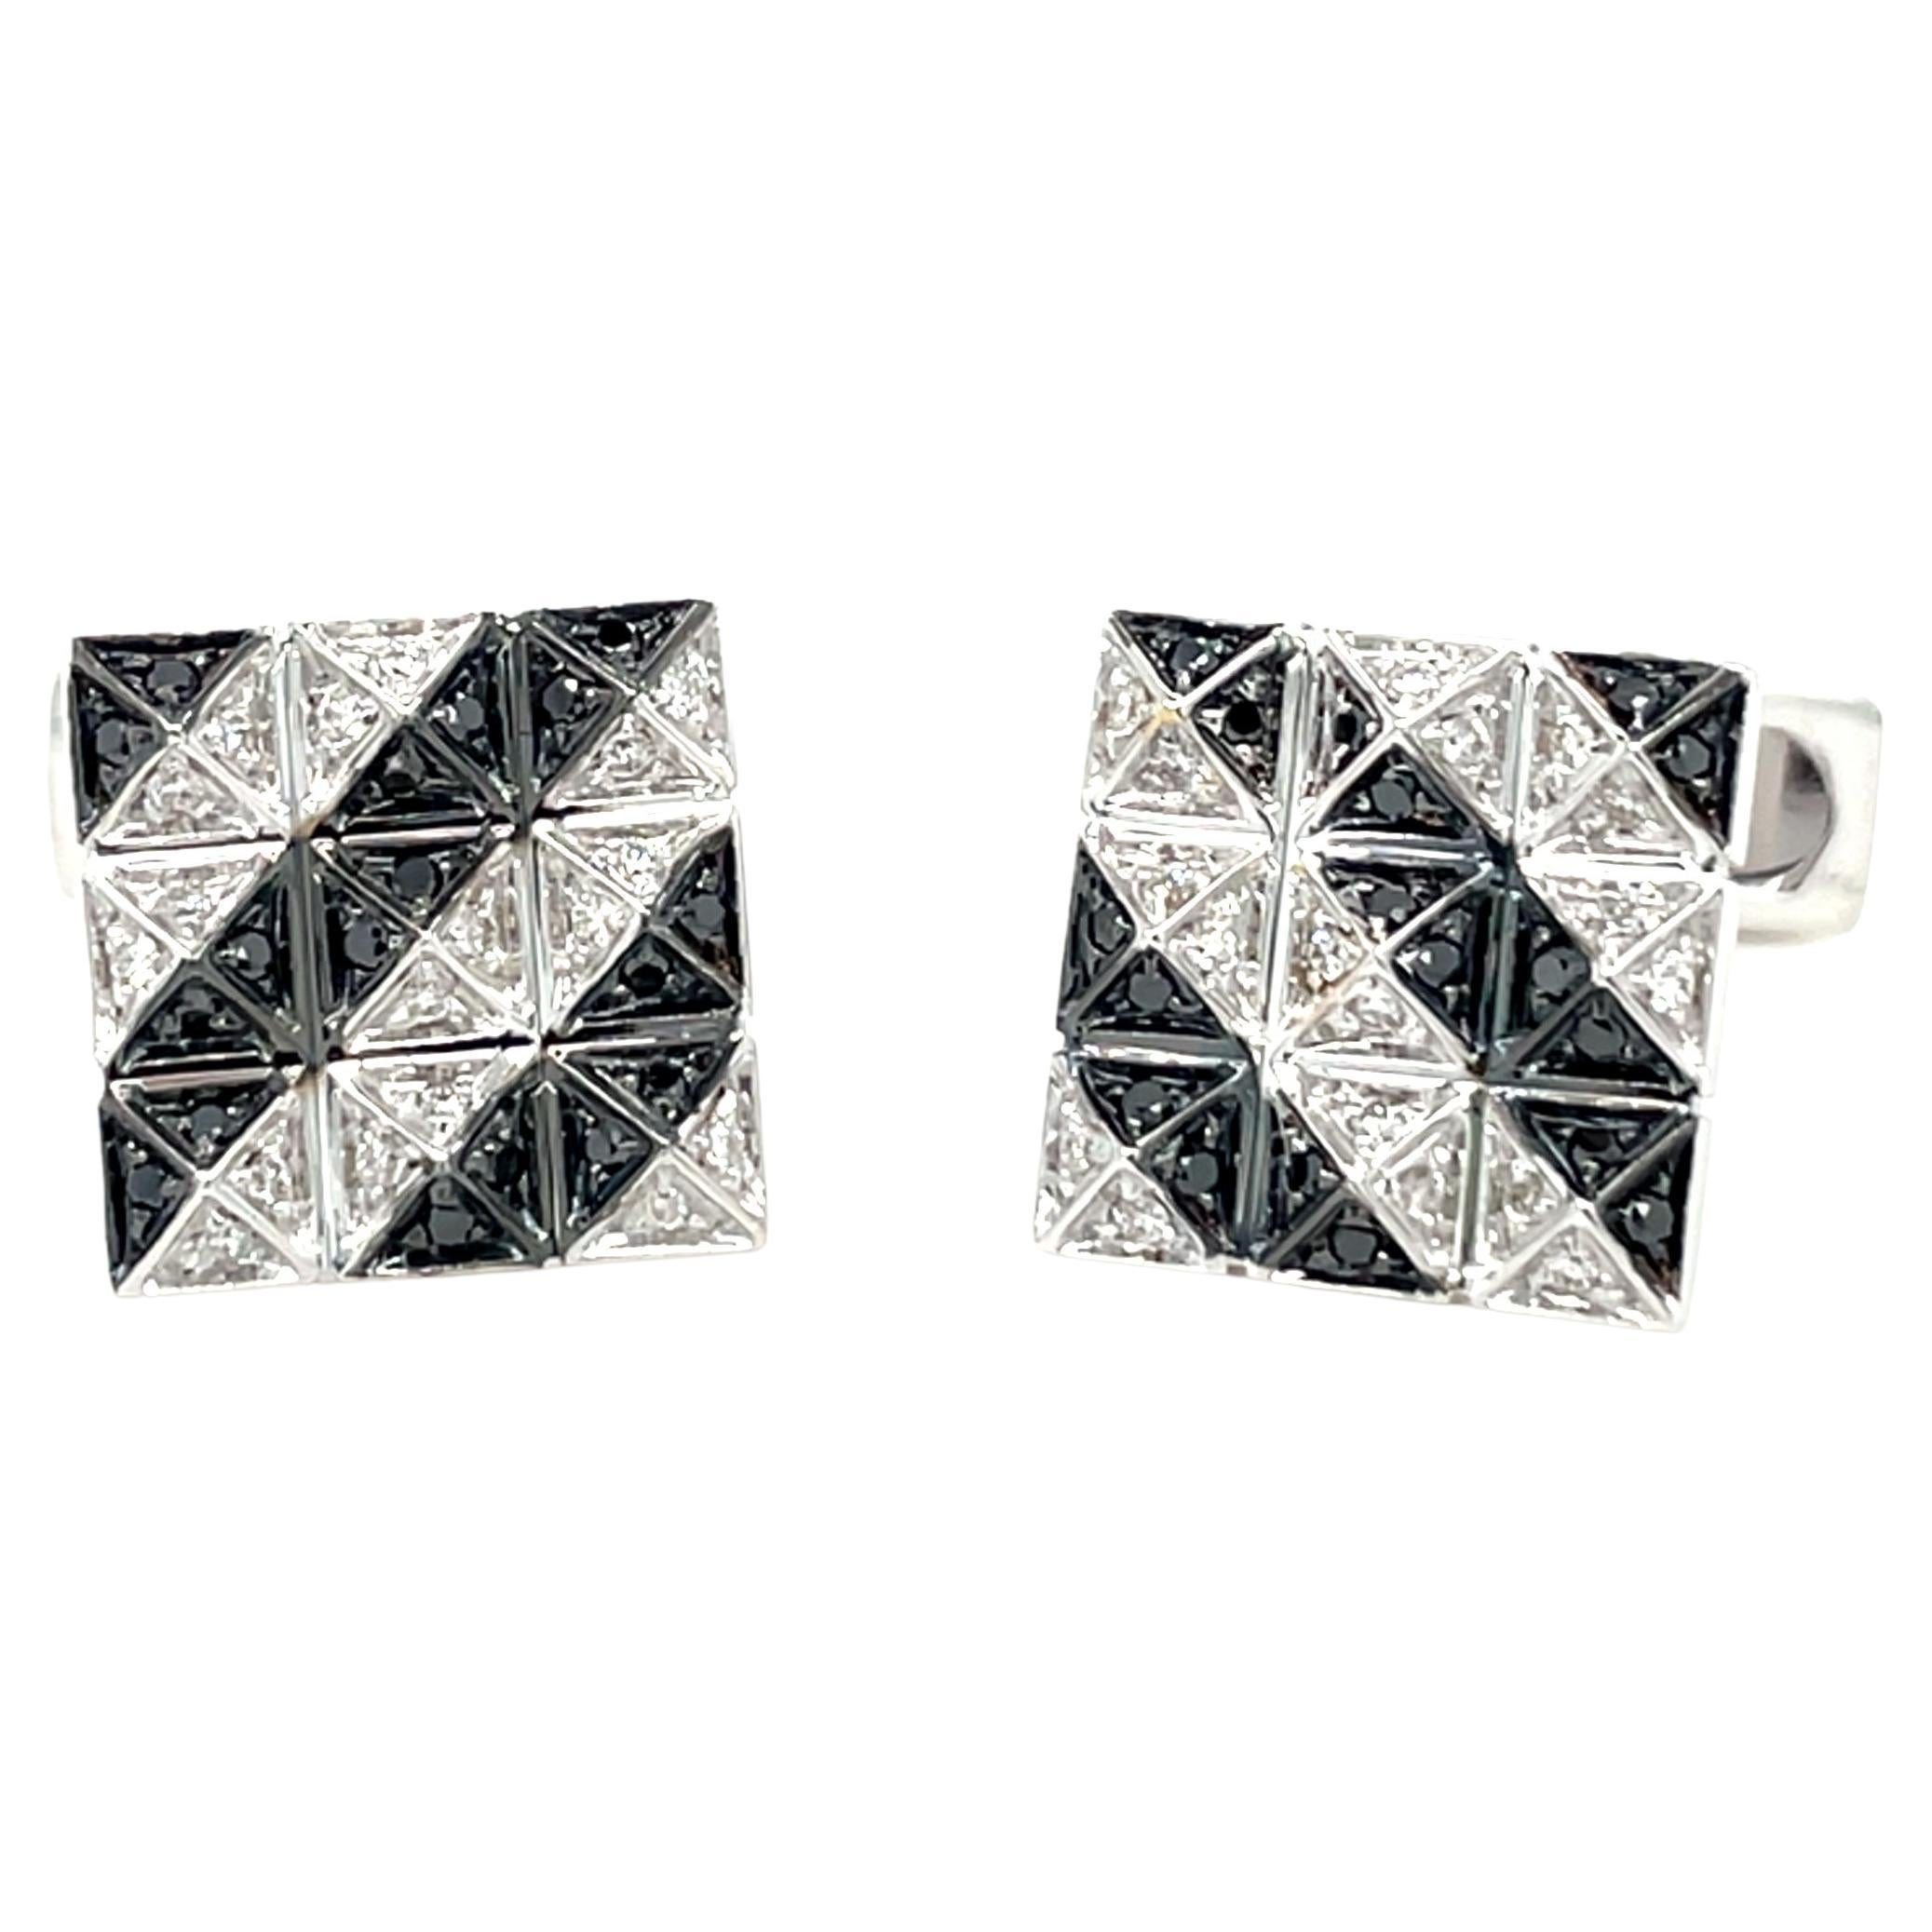 Square Cufflinks Black & White Diamonds